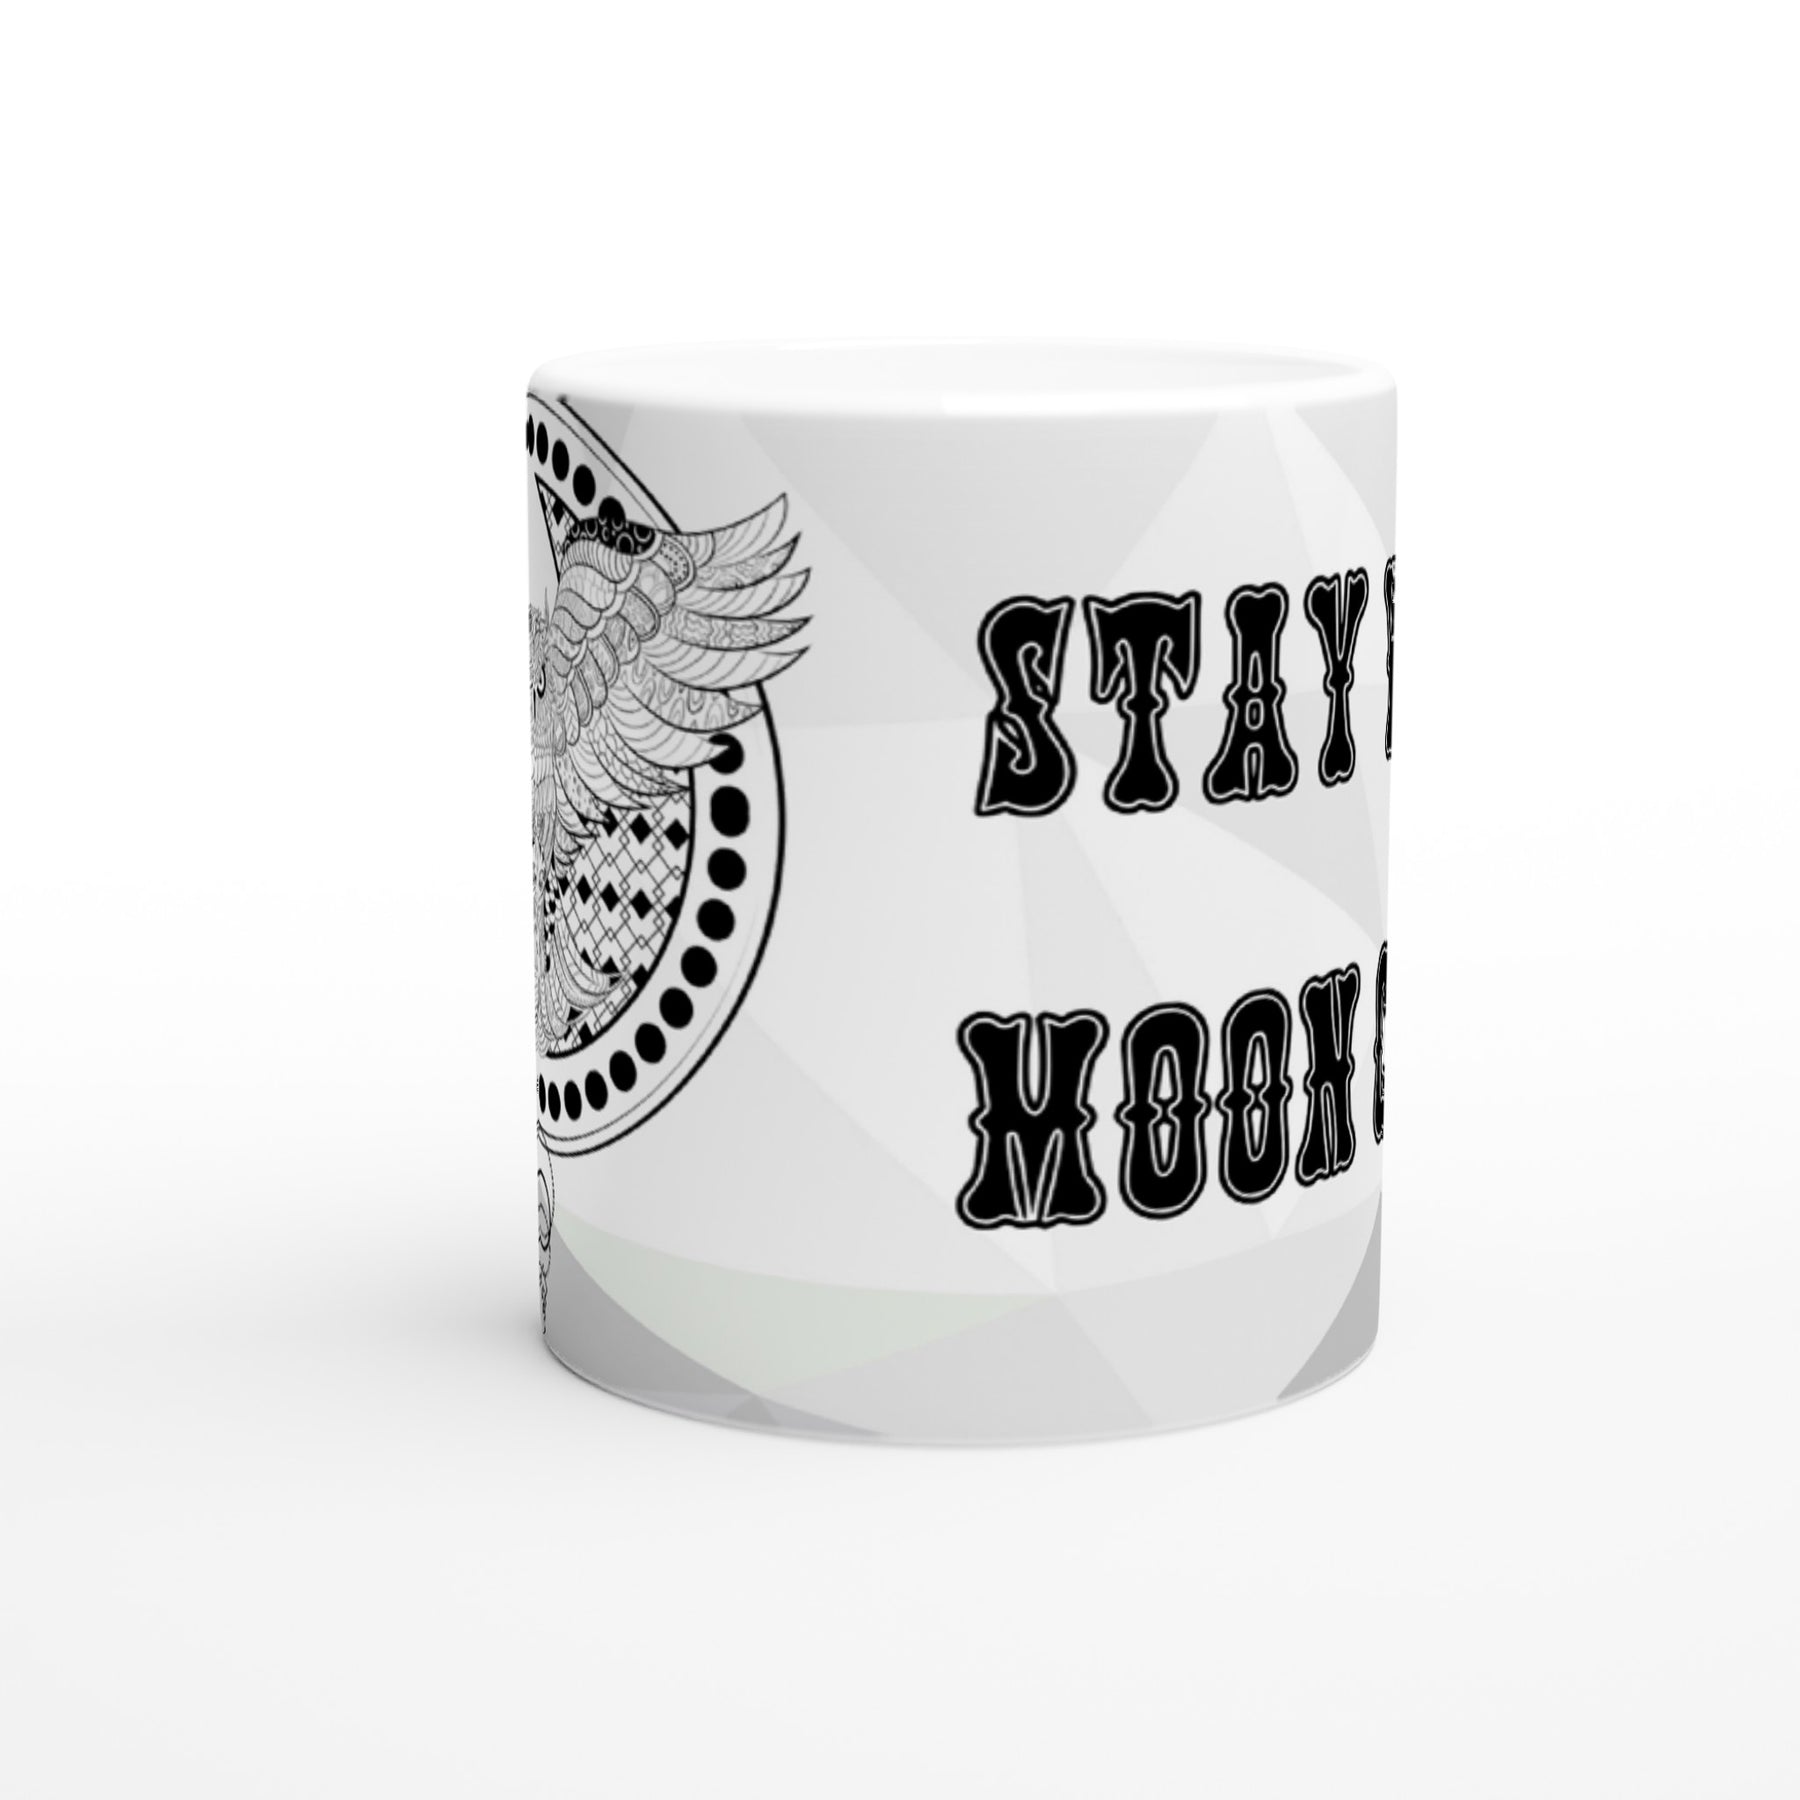 Stay Wild Moon Child- Owl Mug